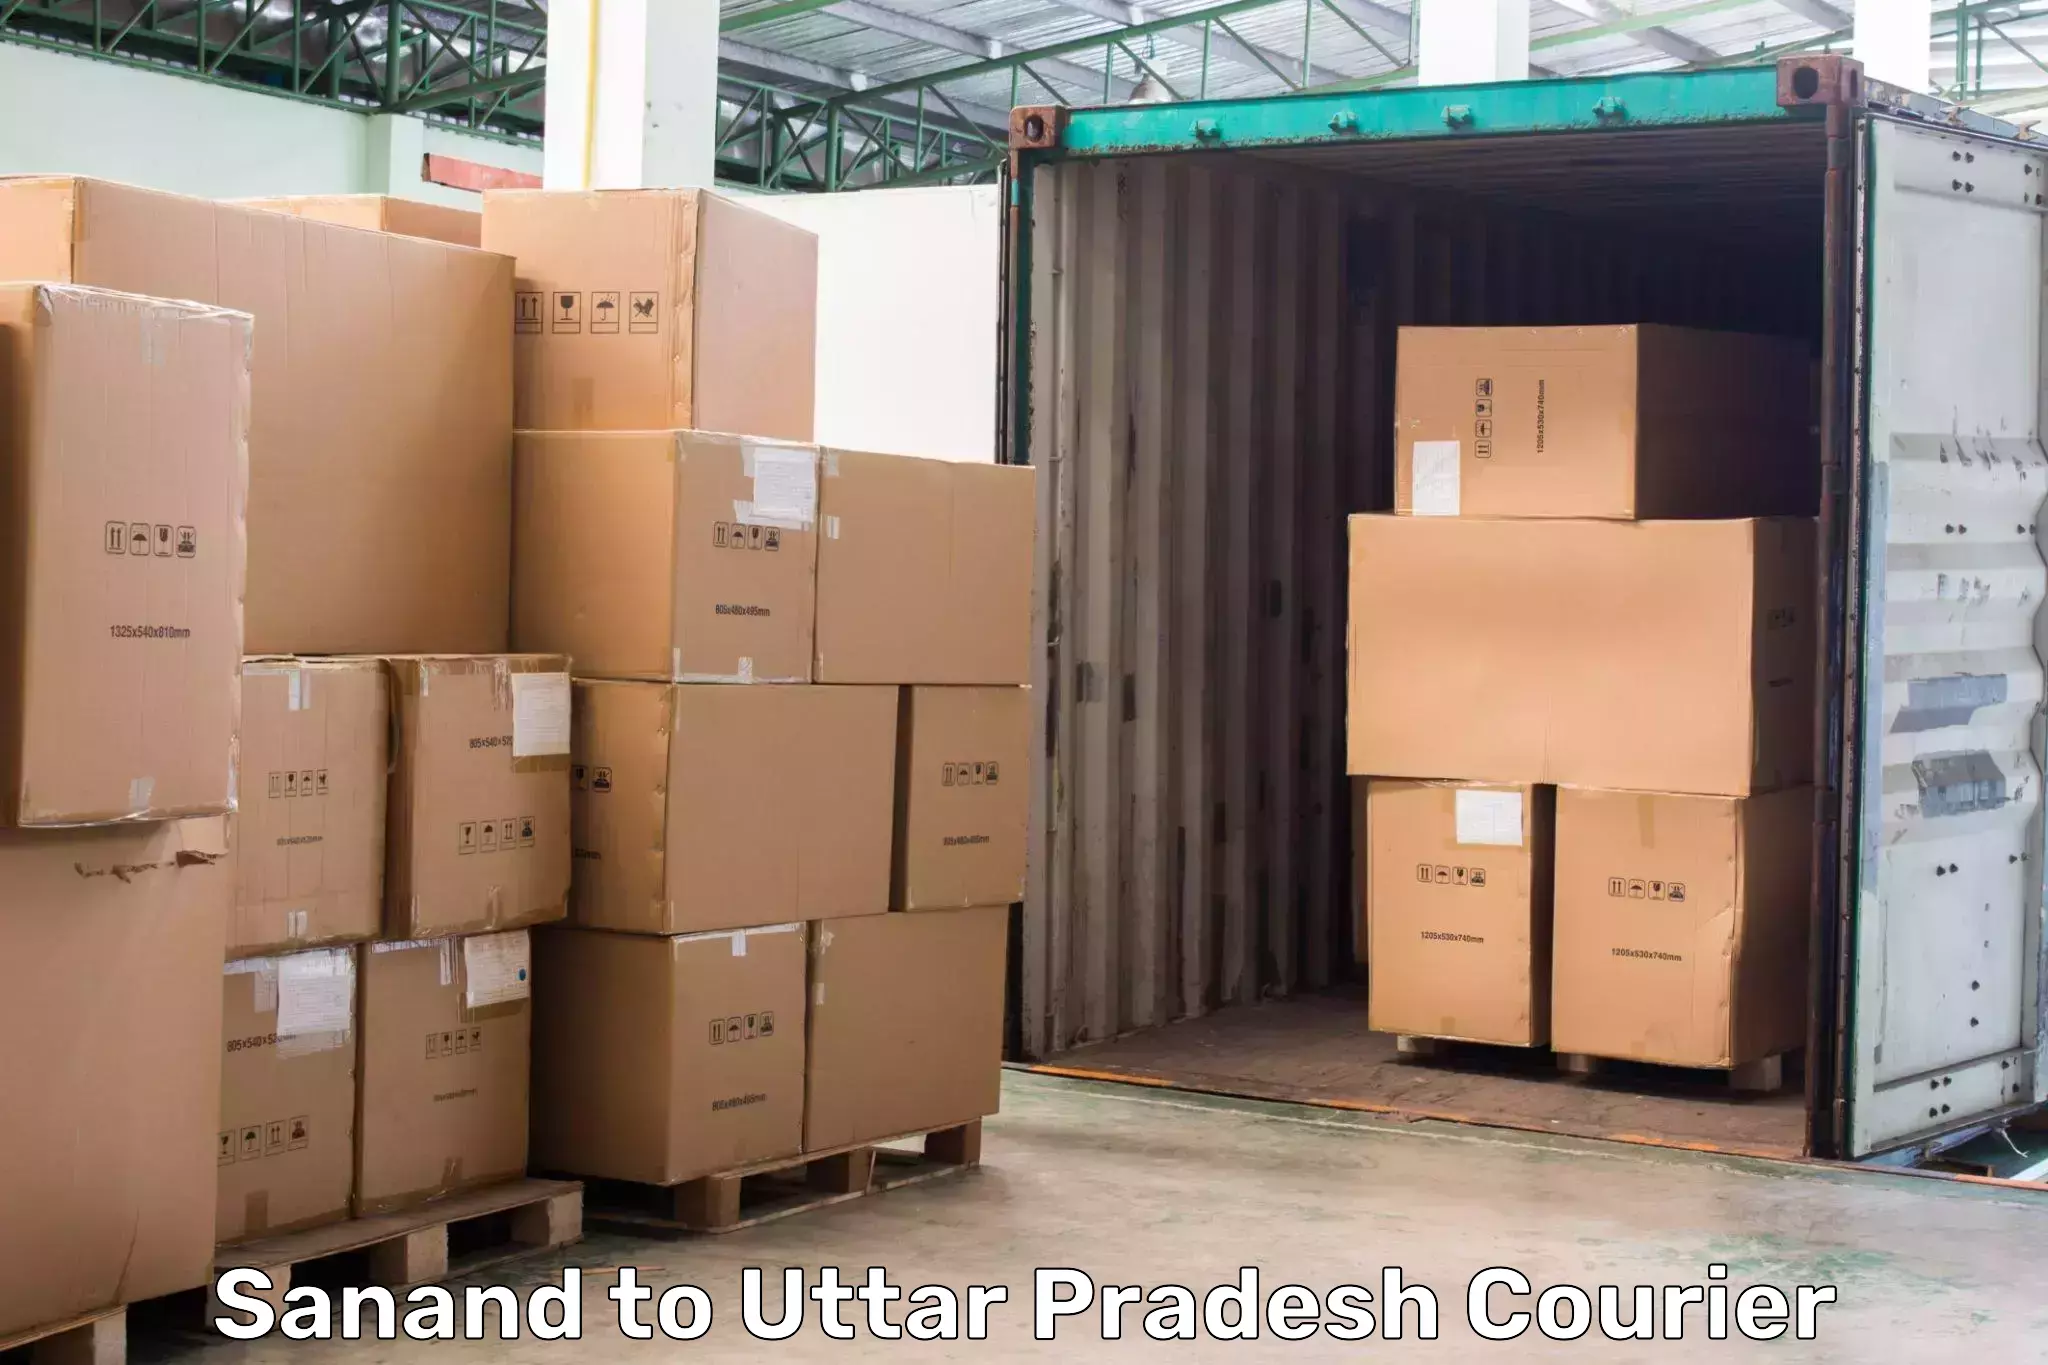 Next day courier Sanand to Uttar Pradesh